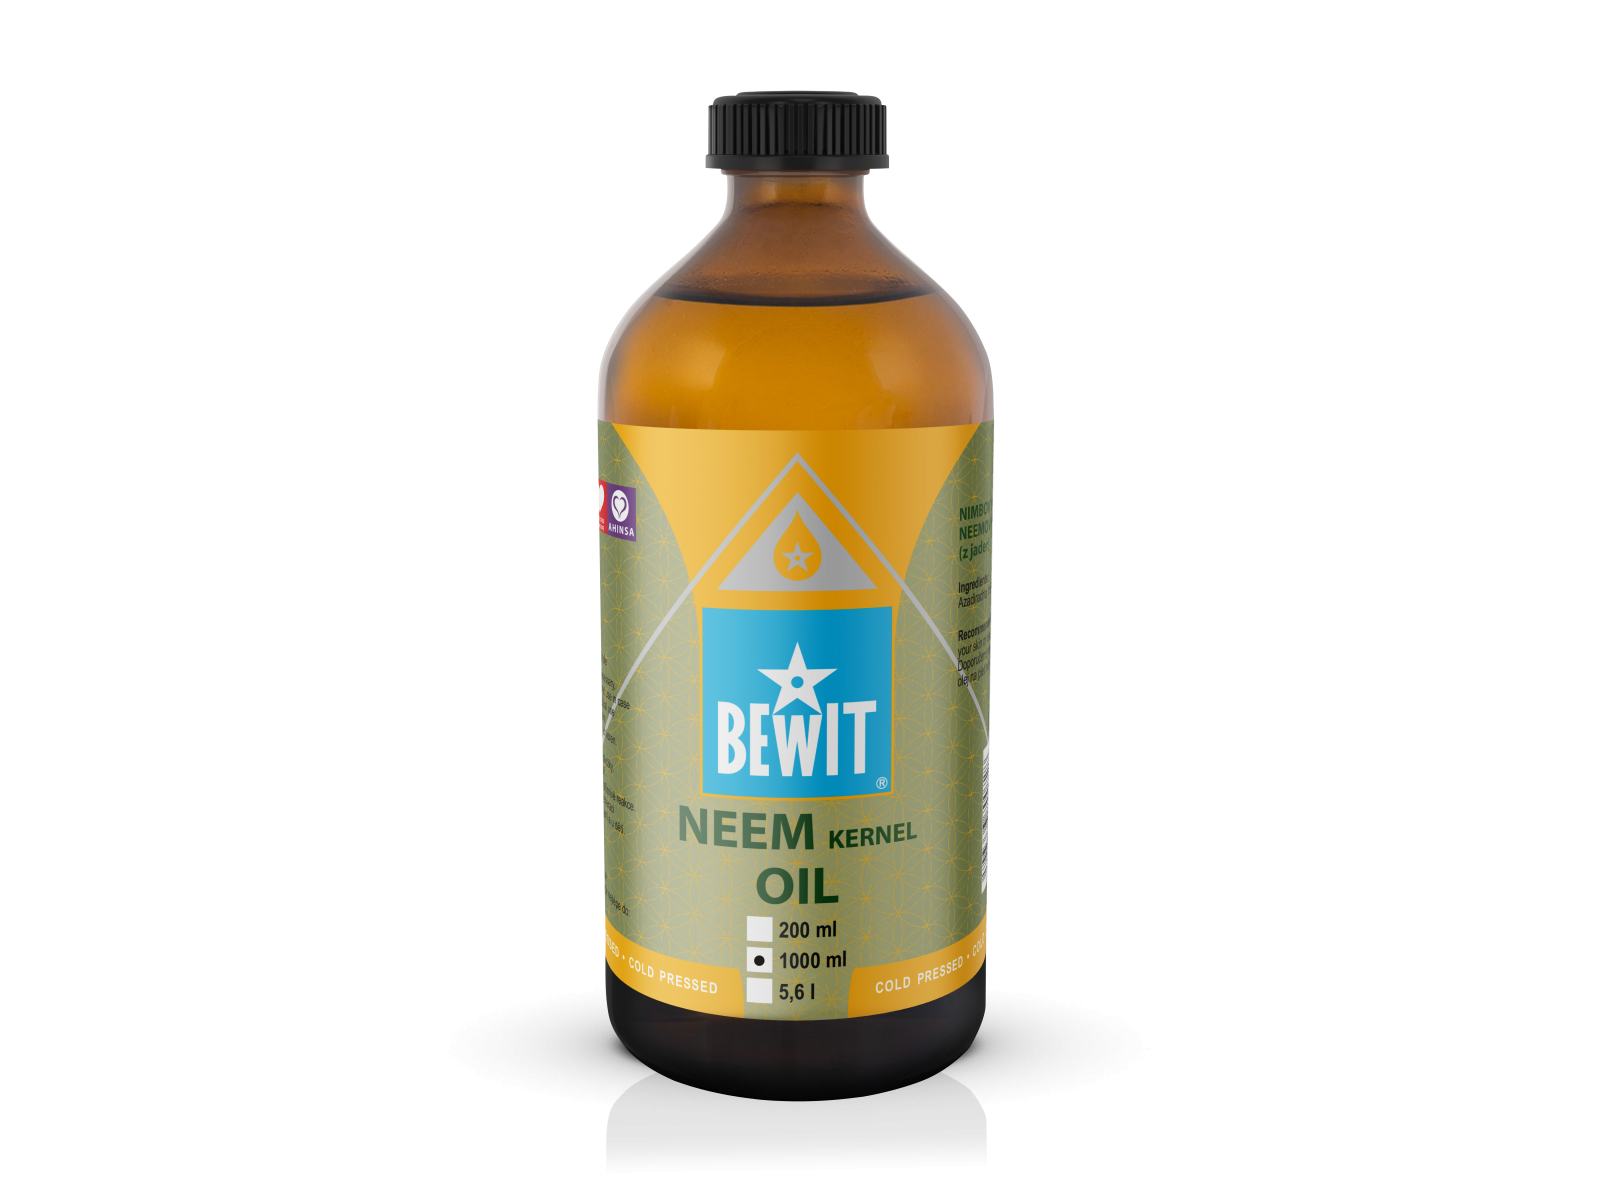 Neem oil (from kernels) - An Ayurvedic panacea - 2